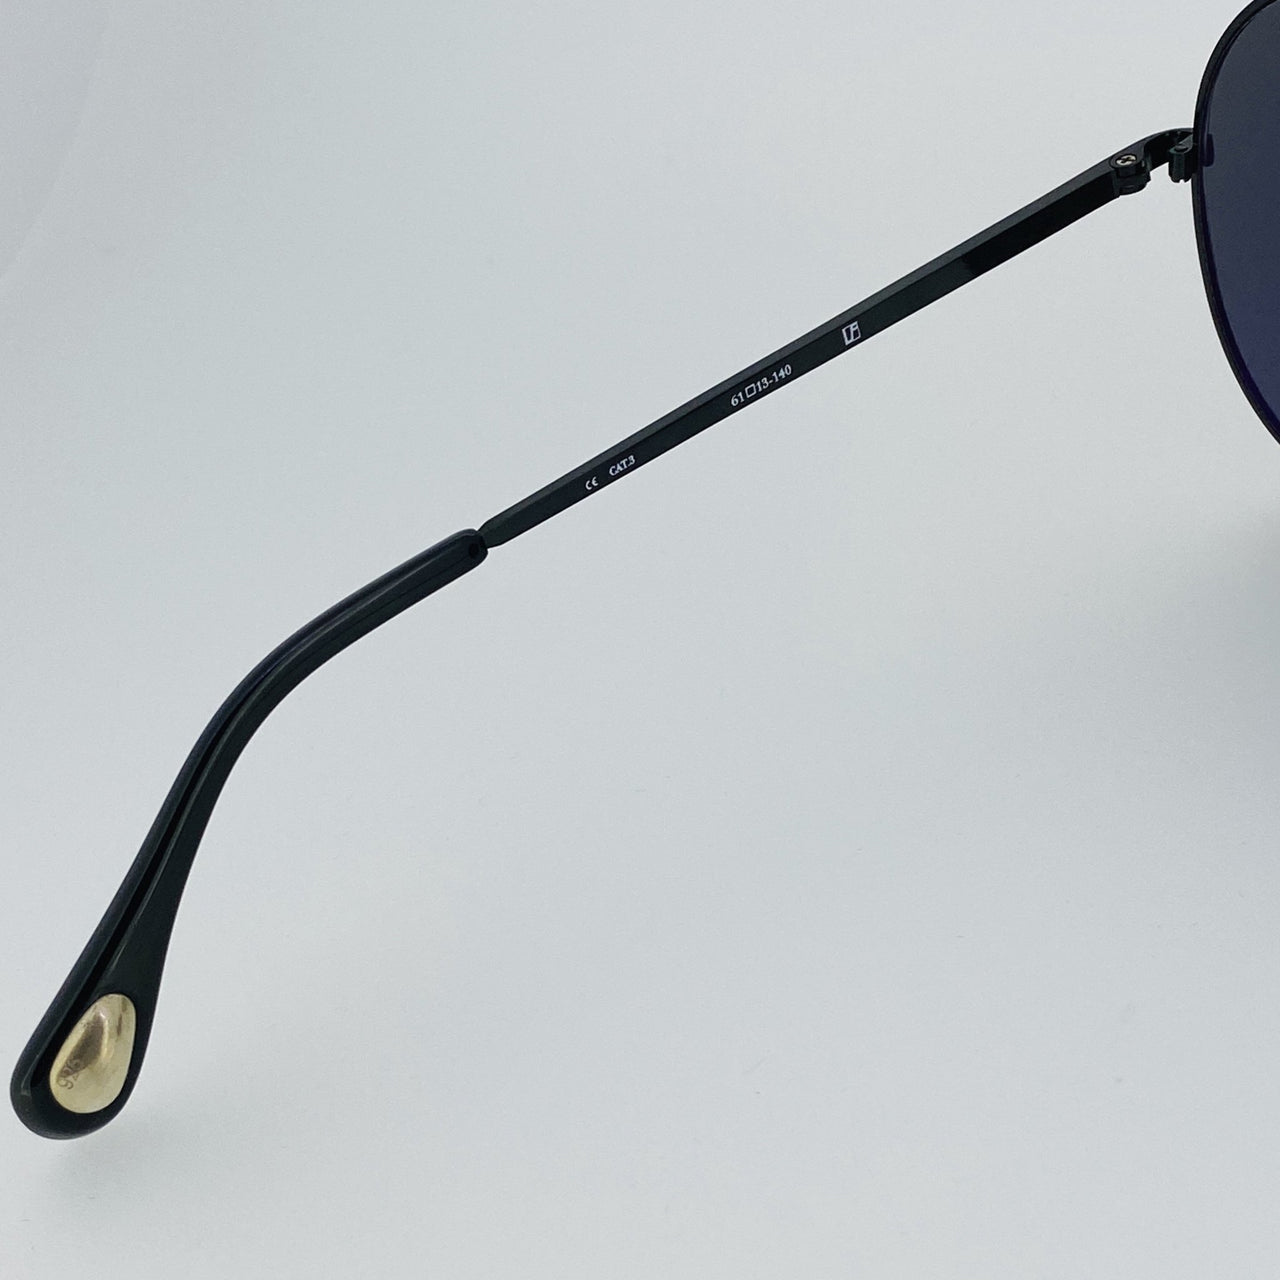 Ann Demeulemeester Sunglasses Titanium Black with Grey Lenses CAT3 AD14C4SUN - Watches & Crystals